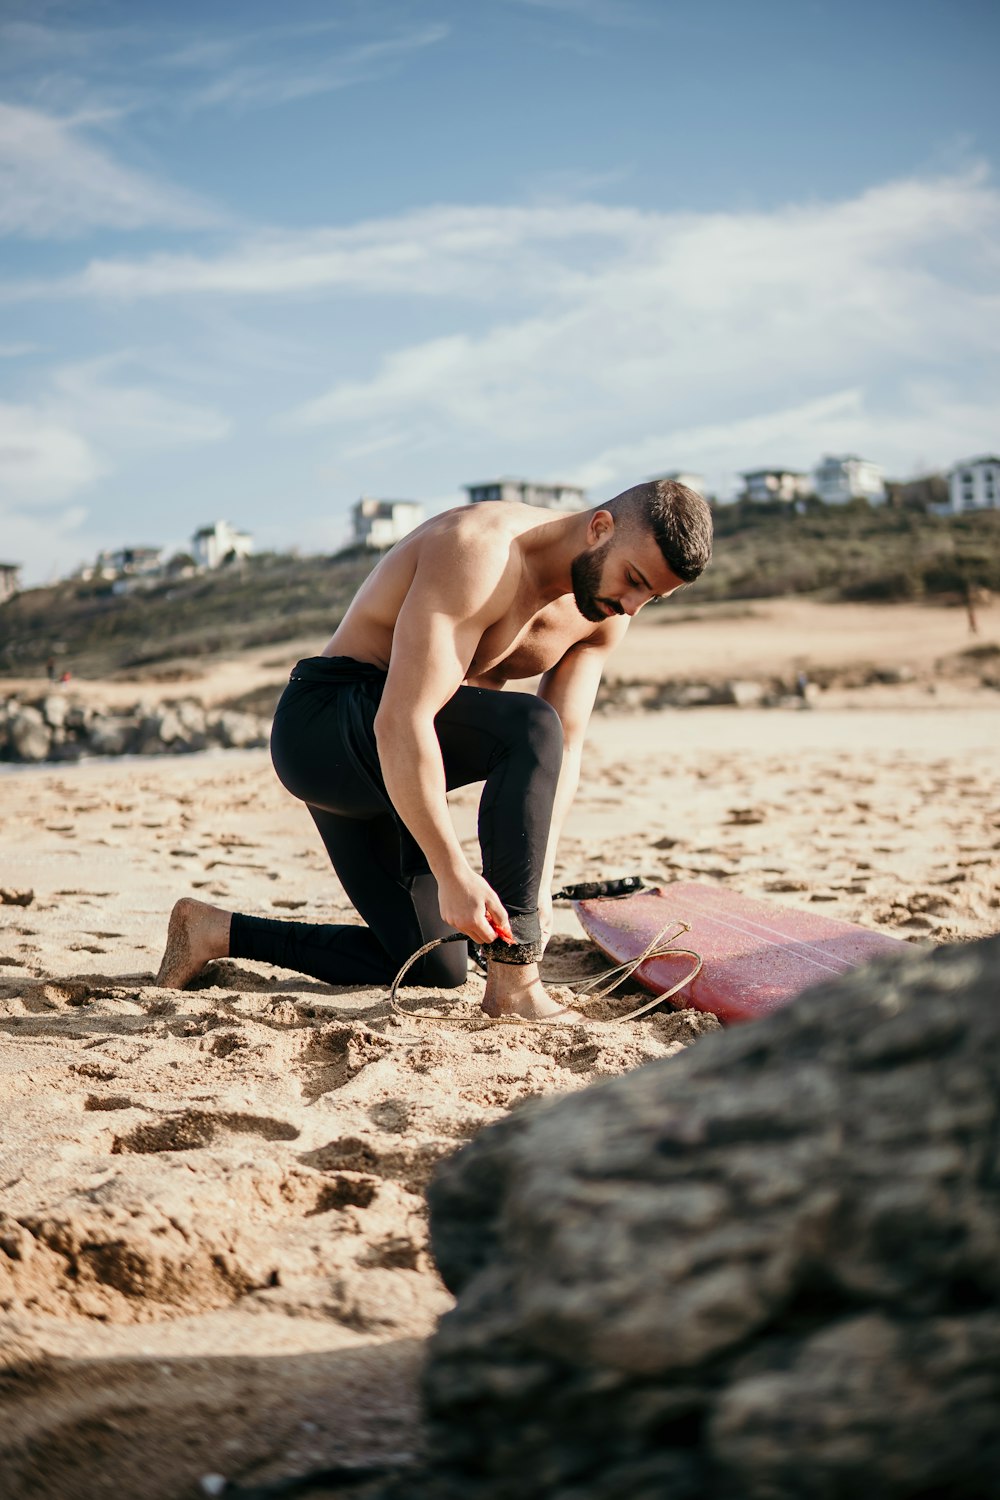 a man kneeling down on a beach next to a surfboard